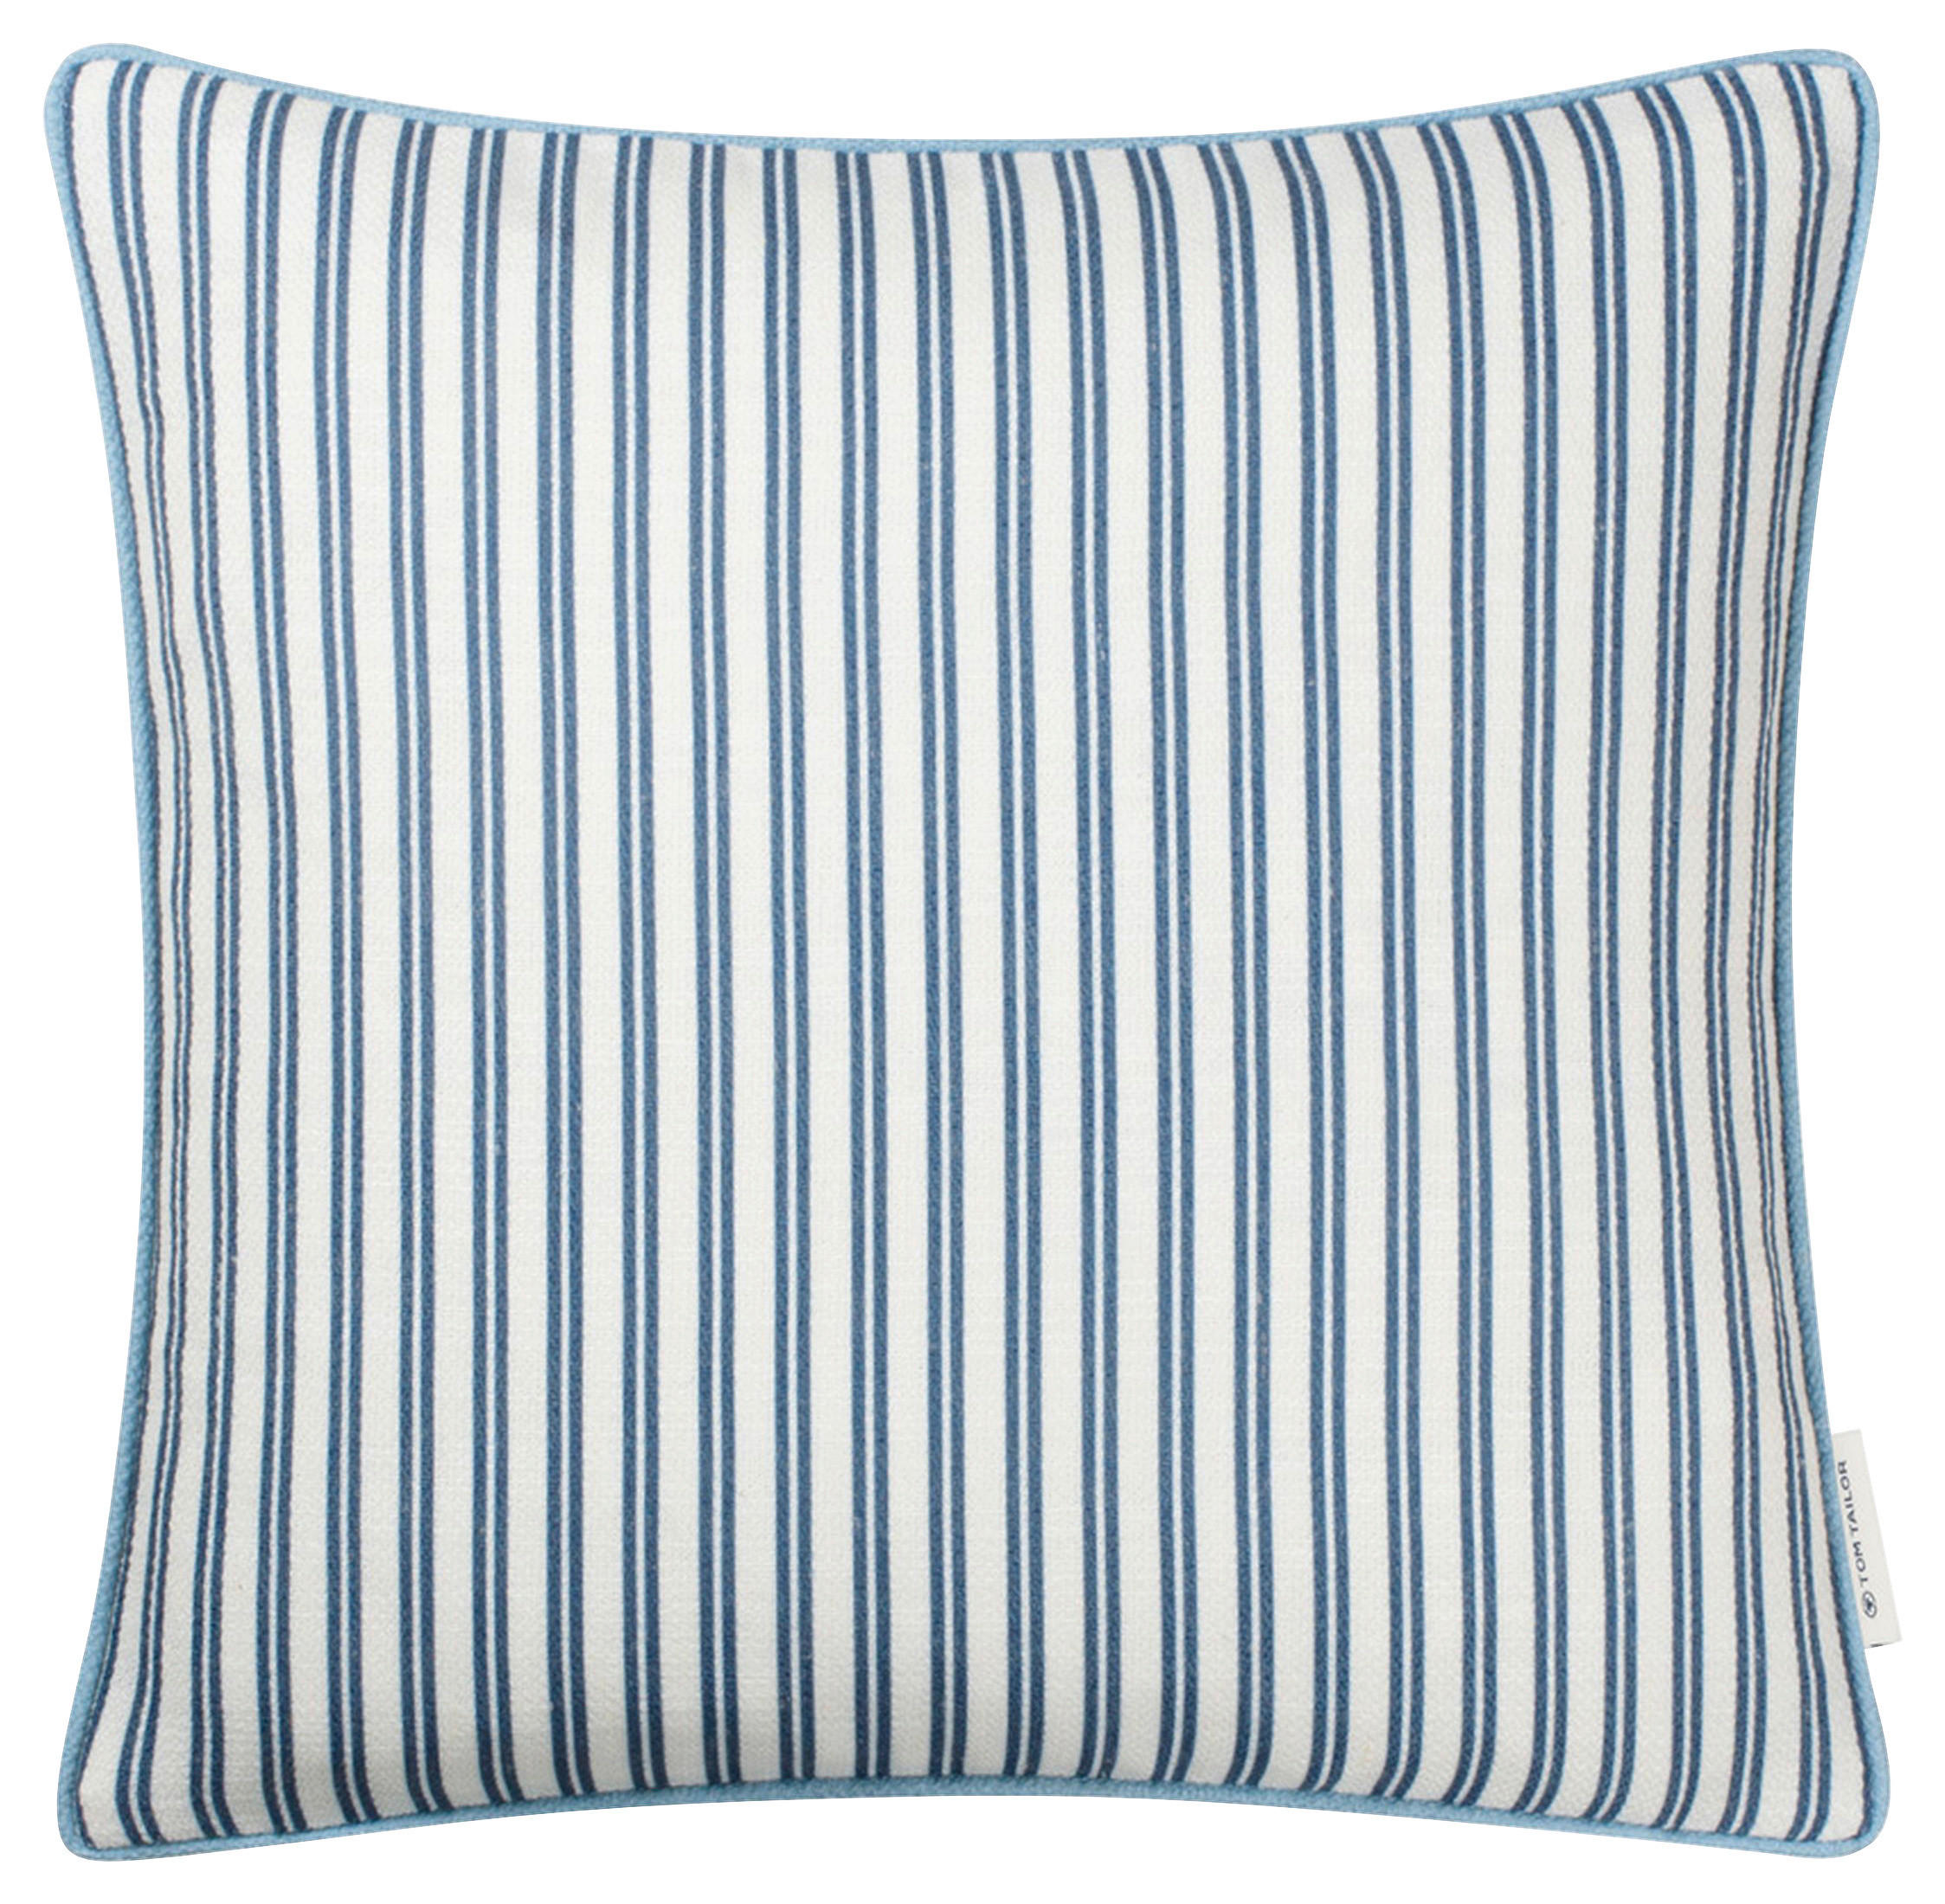 KISSENHÜLLE Little Stripes 45/45 cm  - Blau/Beige, KONVENTIONELL, Textil (45/45cm) - Tom Tailor